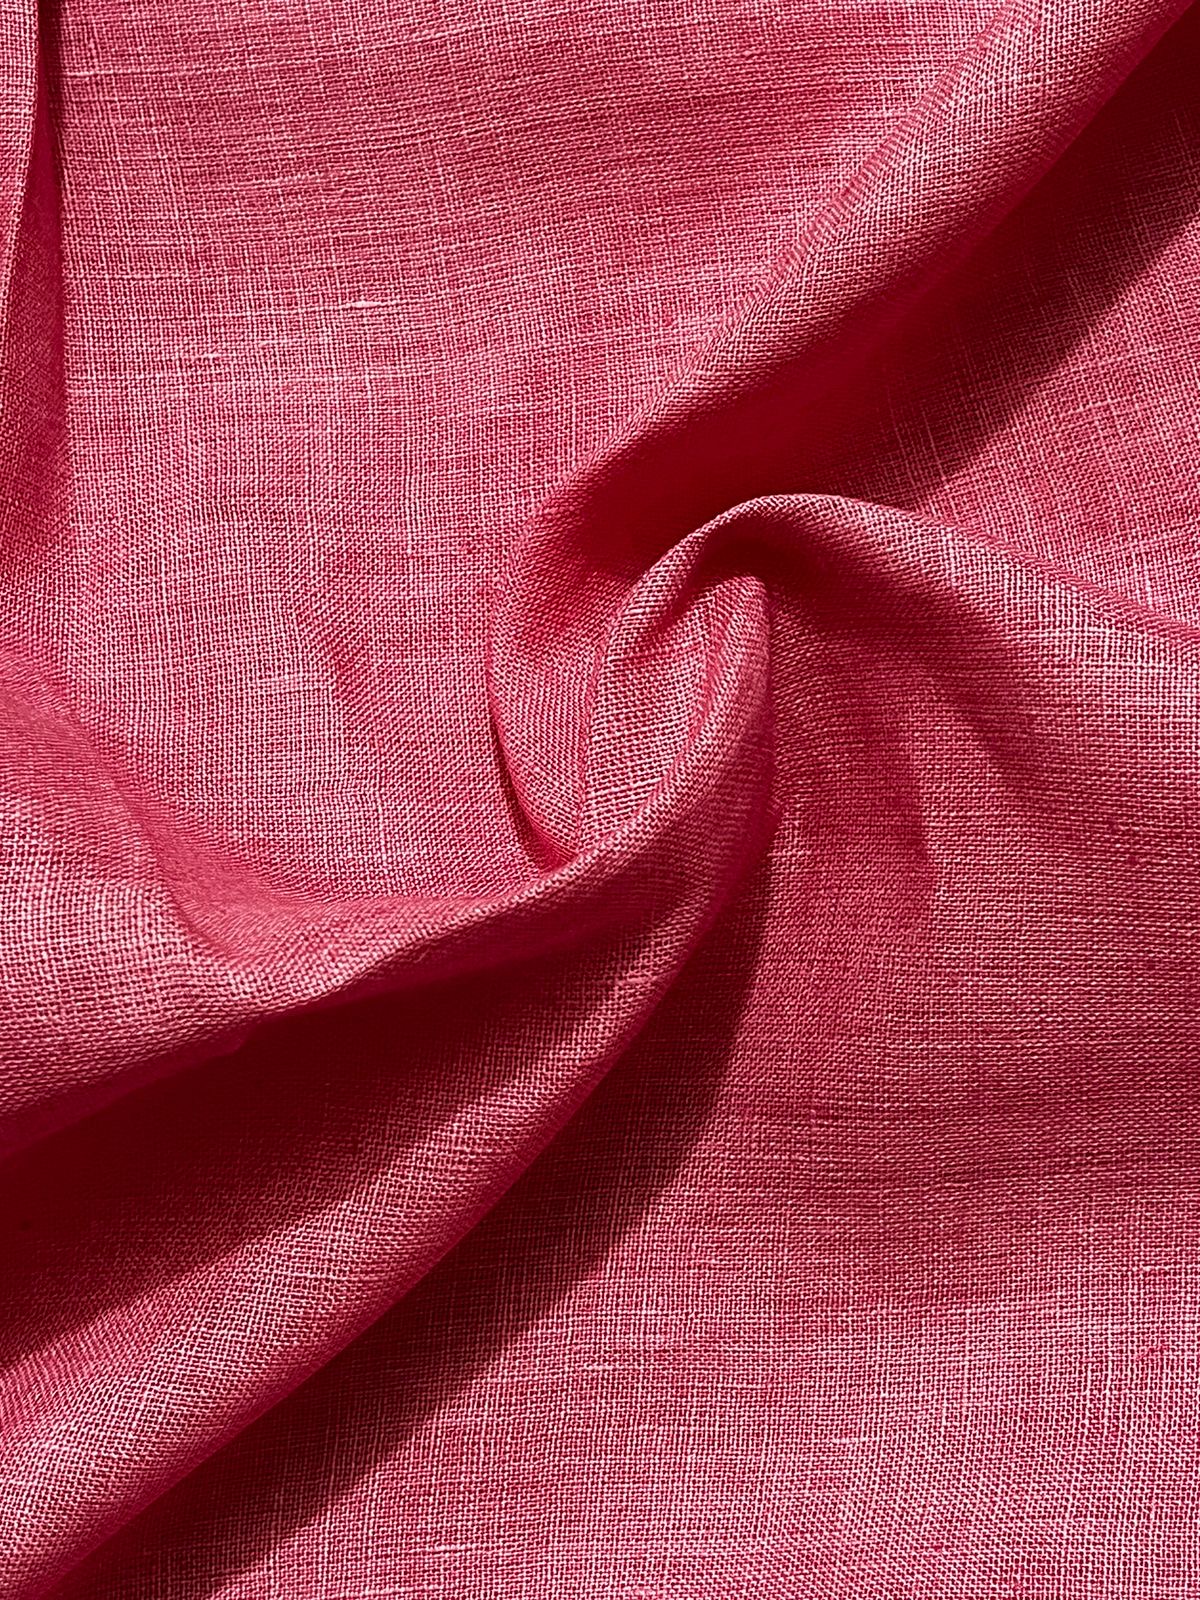 40 lea 58 inch 100% pure Handloom Linen Fabric -Pink Shade